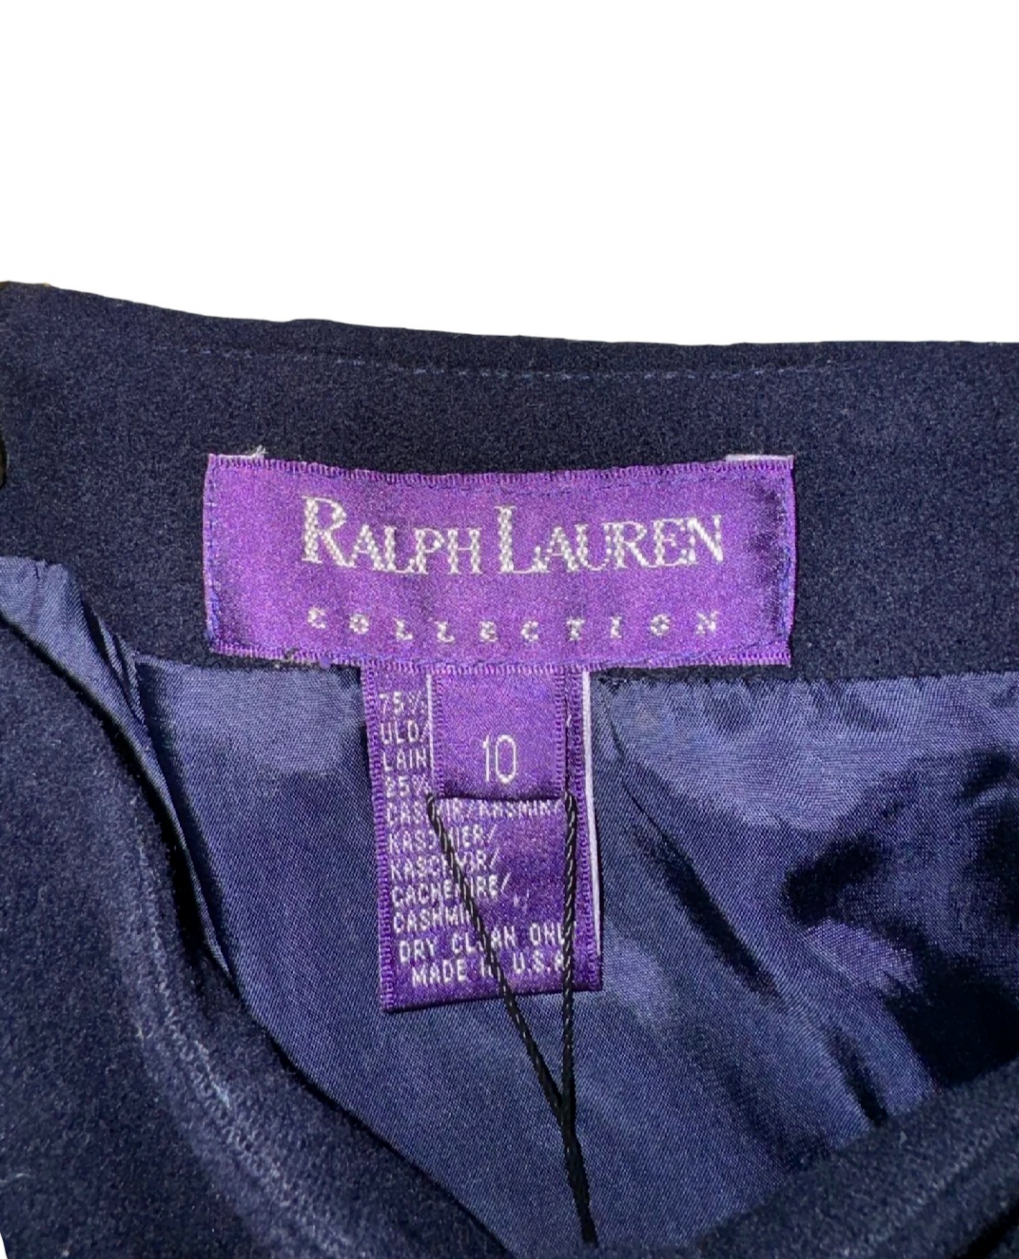 RALPH LAUREN Purple Label Pencil Wool Cashmere Skirt